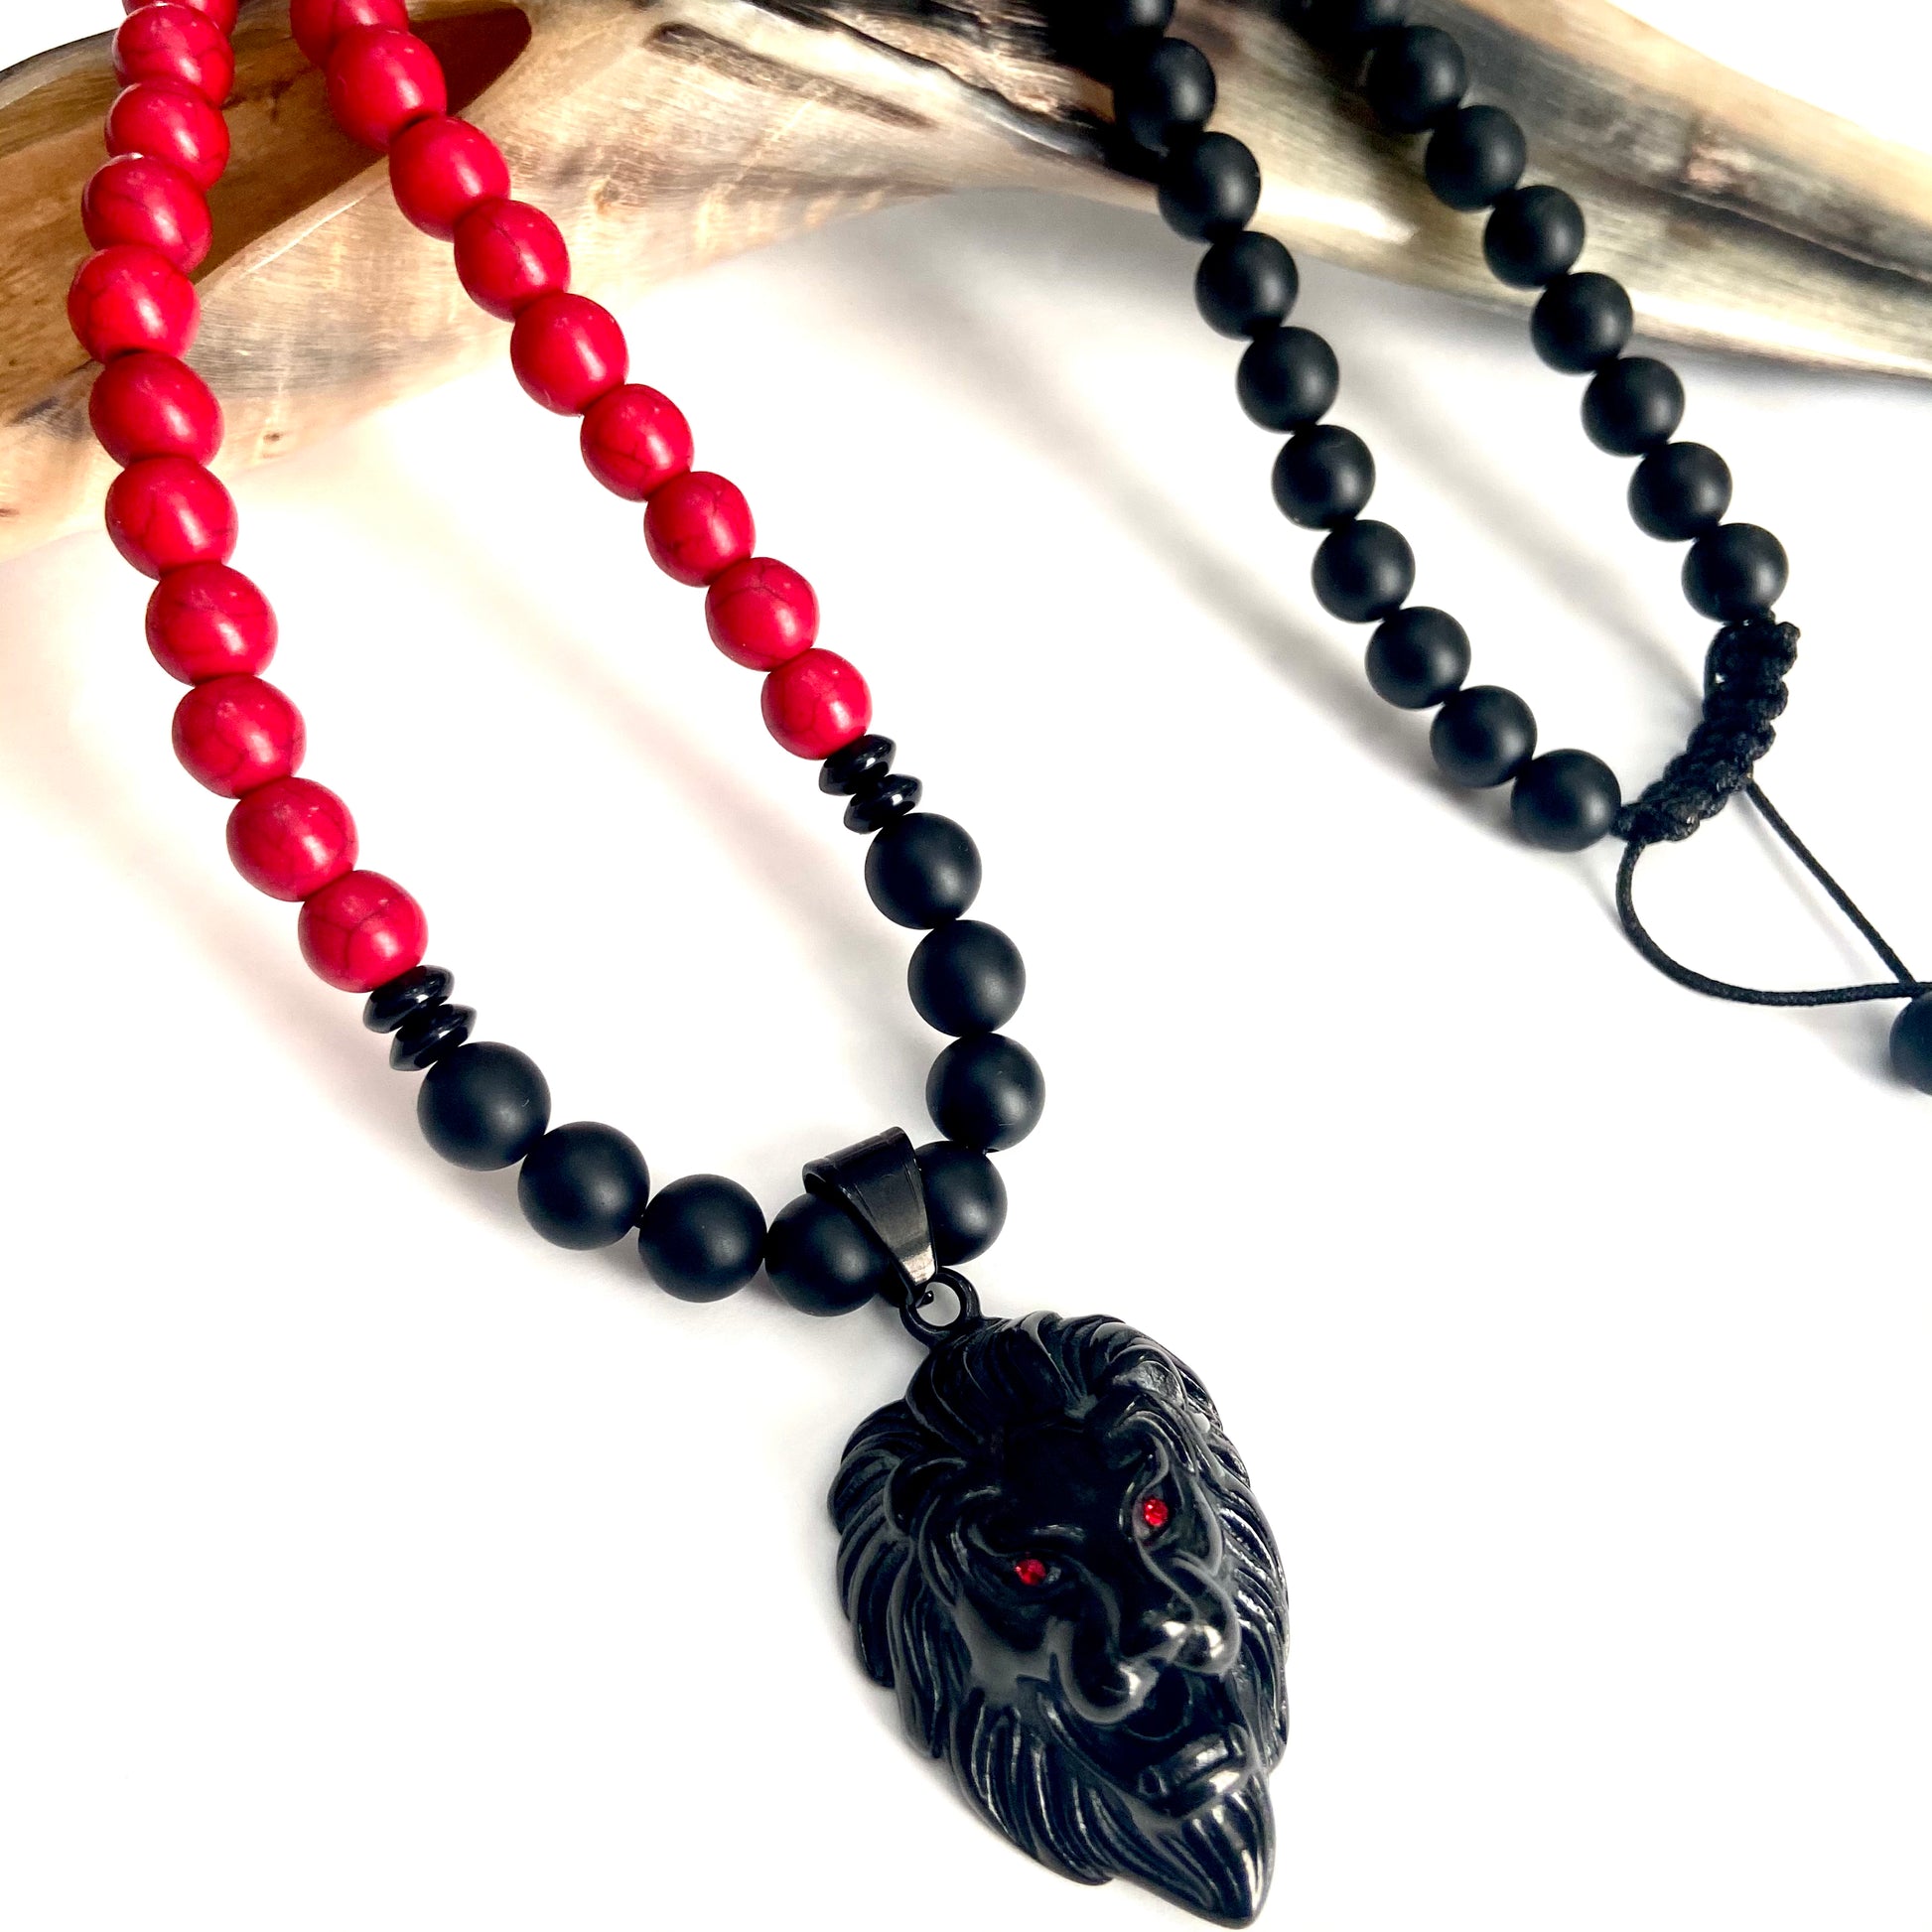 Red Fire Judah Lion Onyx Necklace(8mm) Chaka Beads